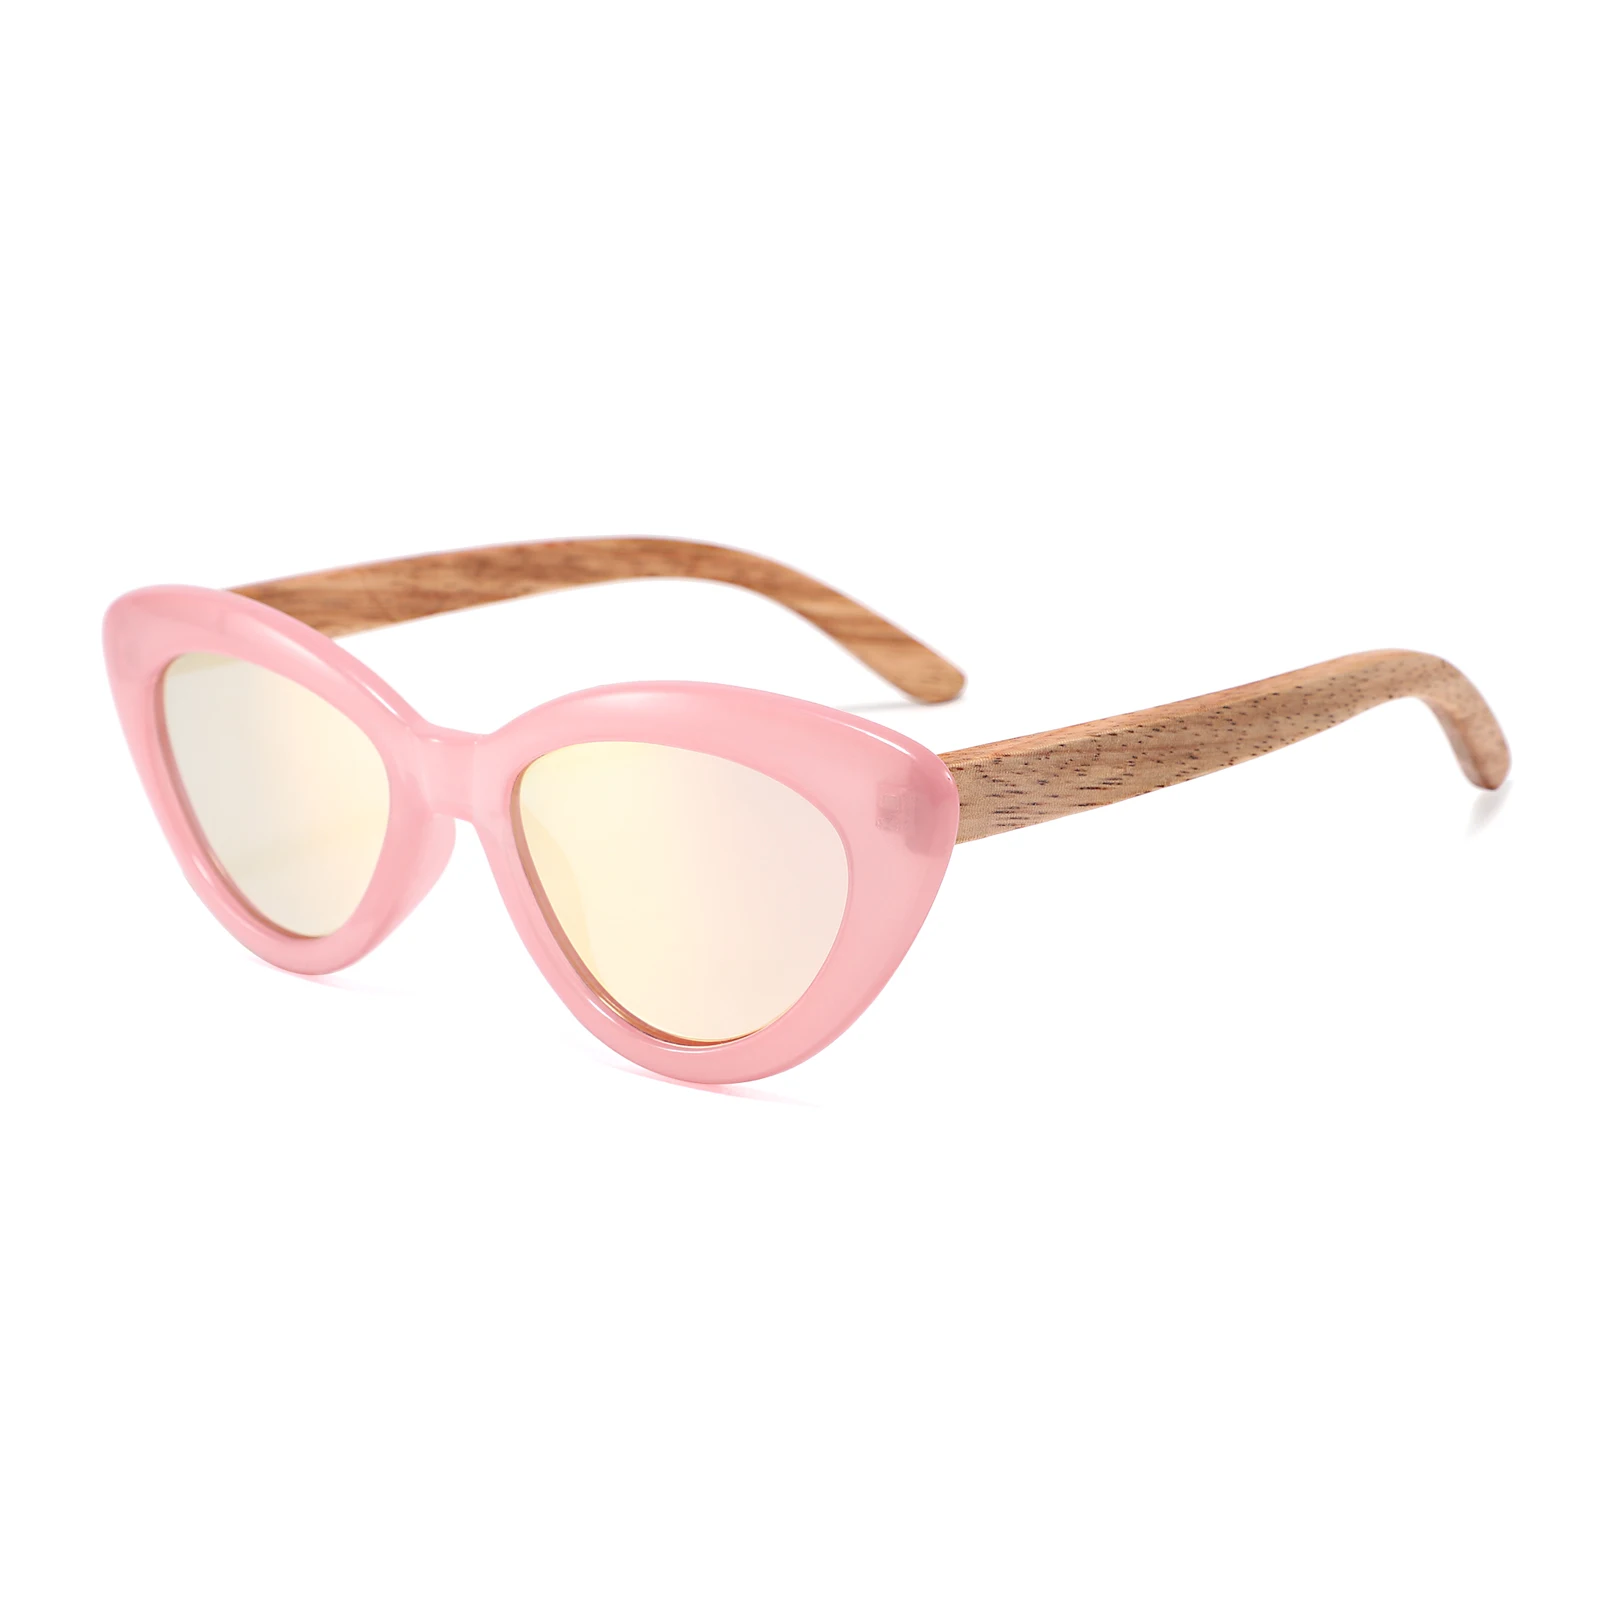 2022 new sunglasses arrivals custom logo girls pink sun glasses polarized wooden sunglasses wood sun shades bamboo sun glasses, More colors can be custom